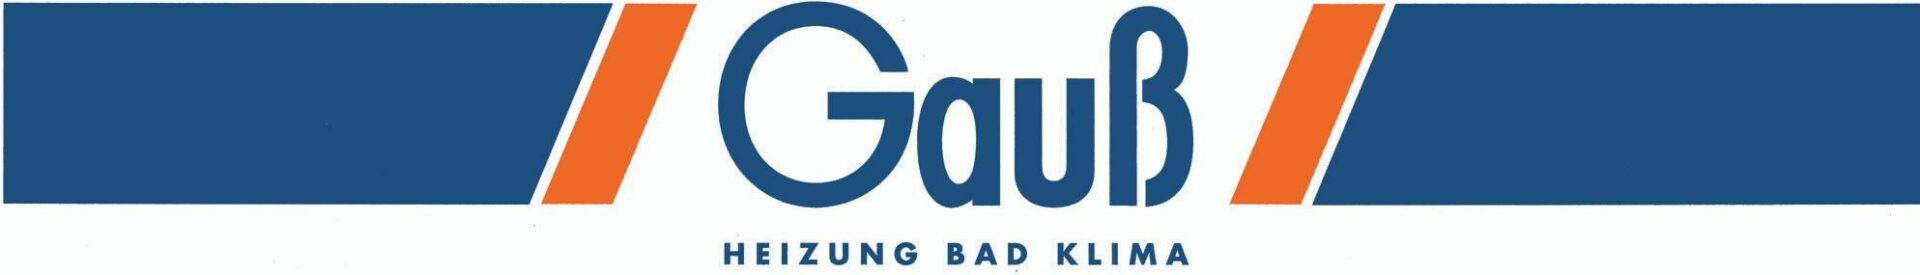 gauB